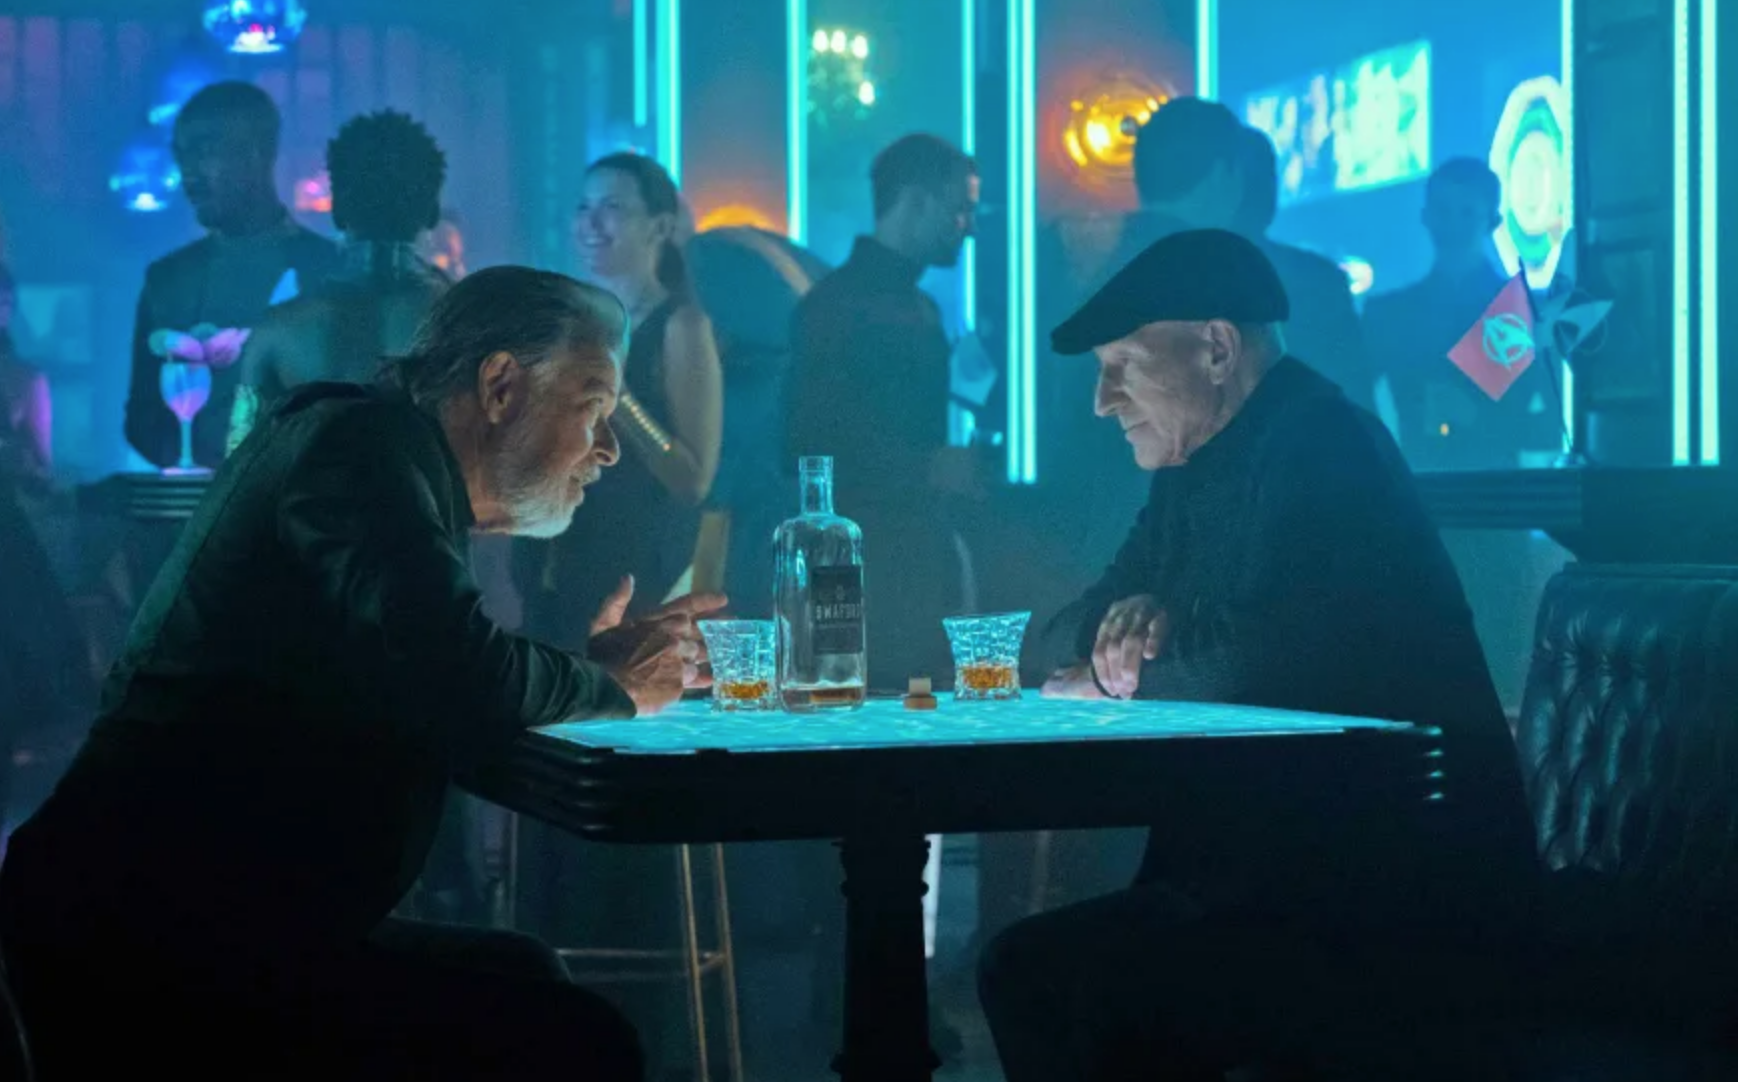 Riker and Picard meet in a dark bar